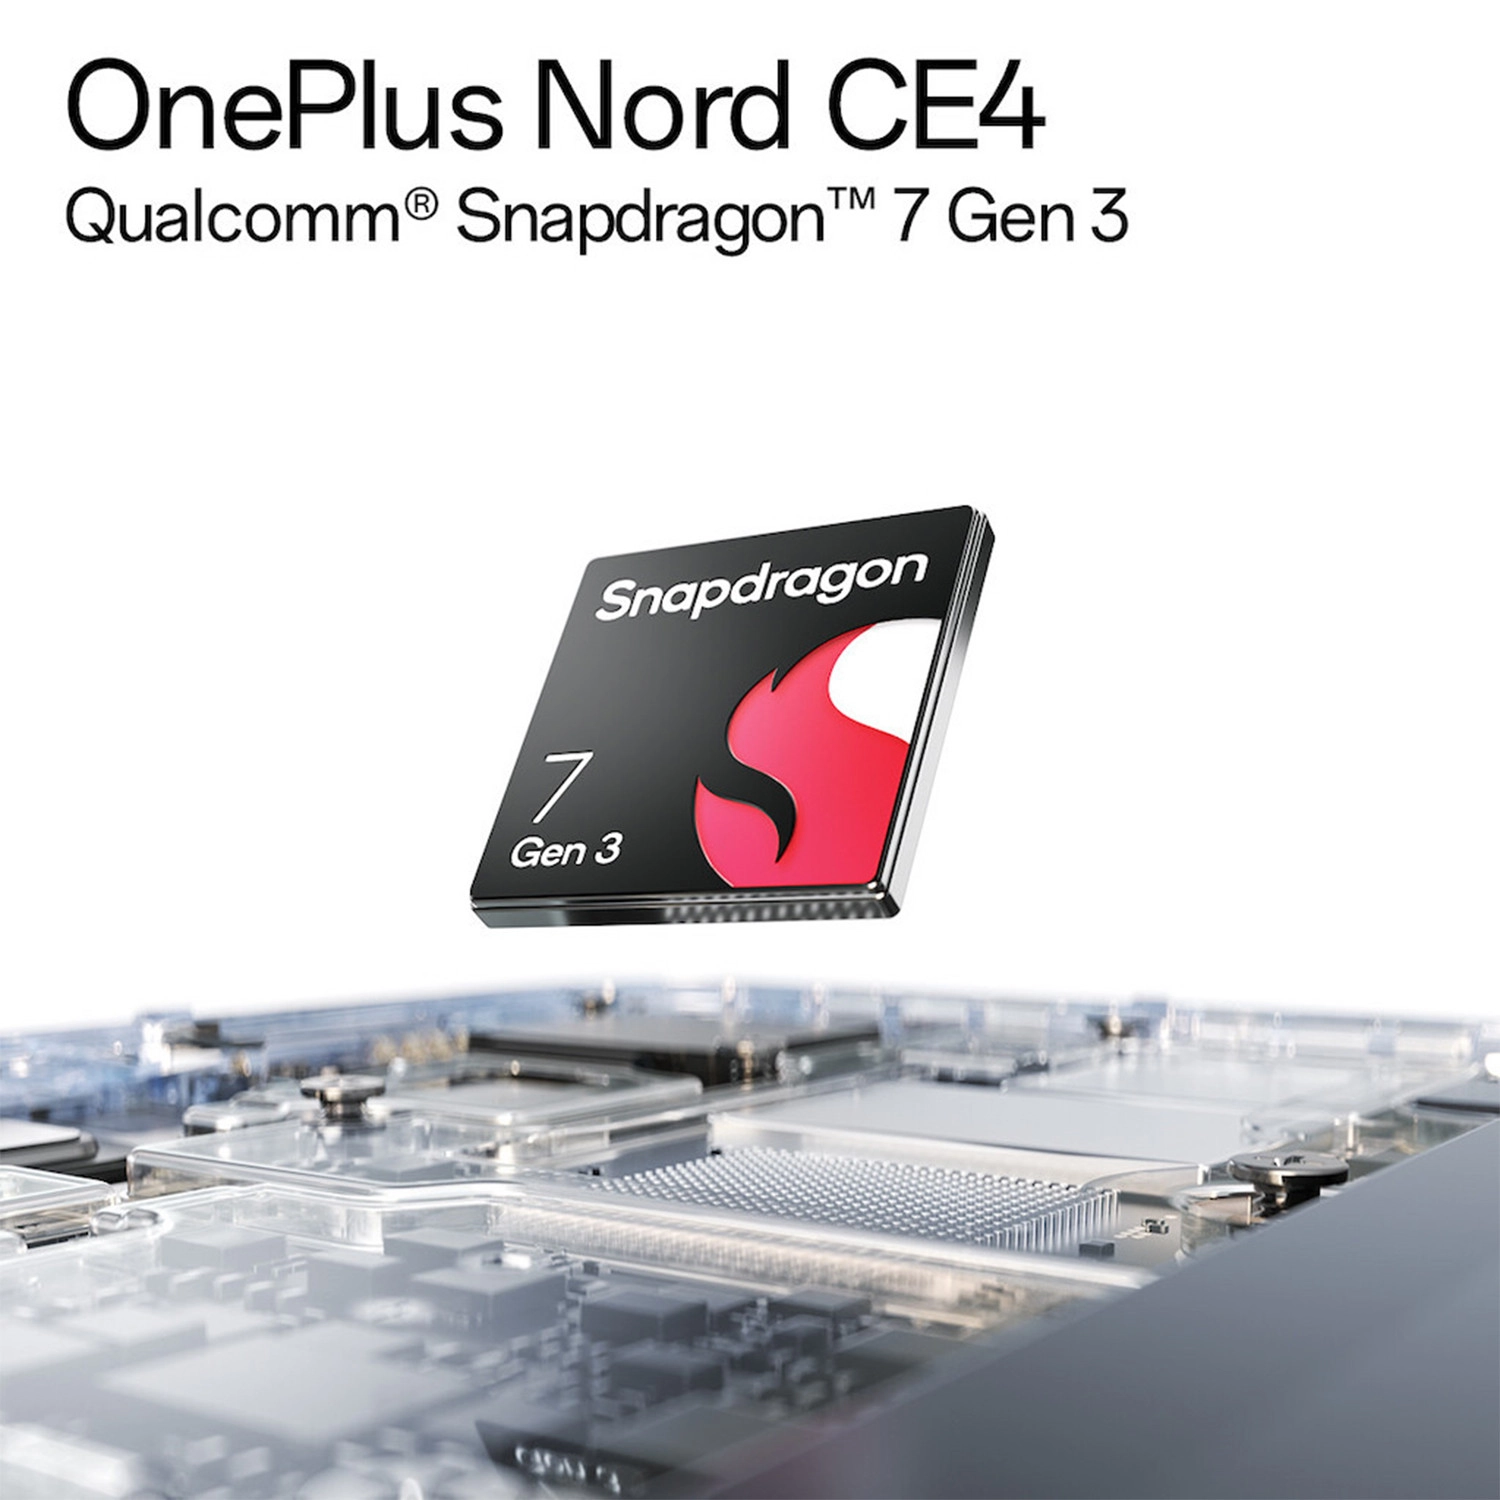 oneplus-nord-ce4-ra-mat-chip